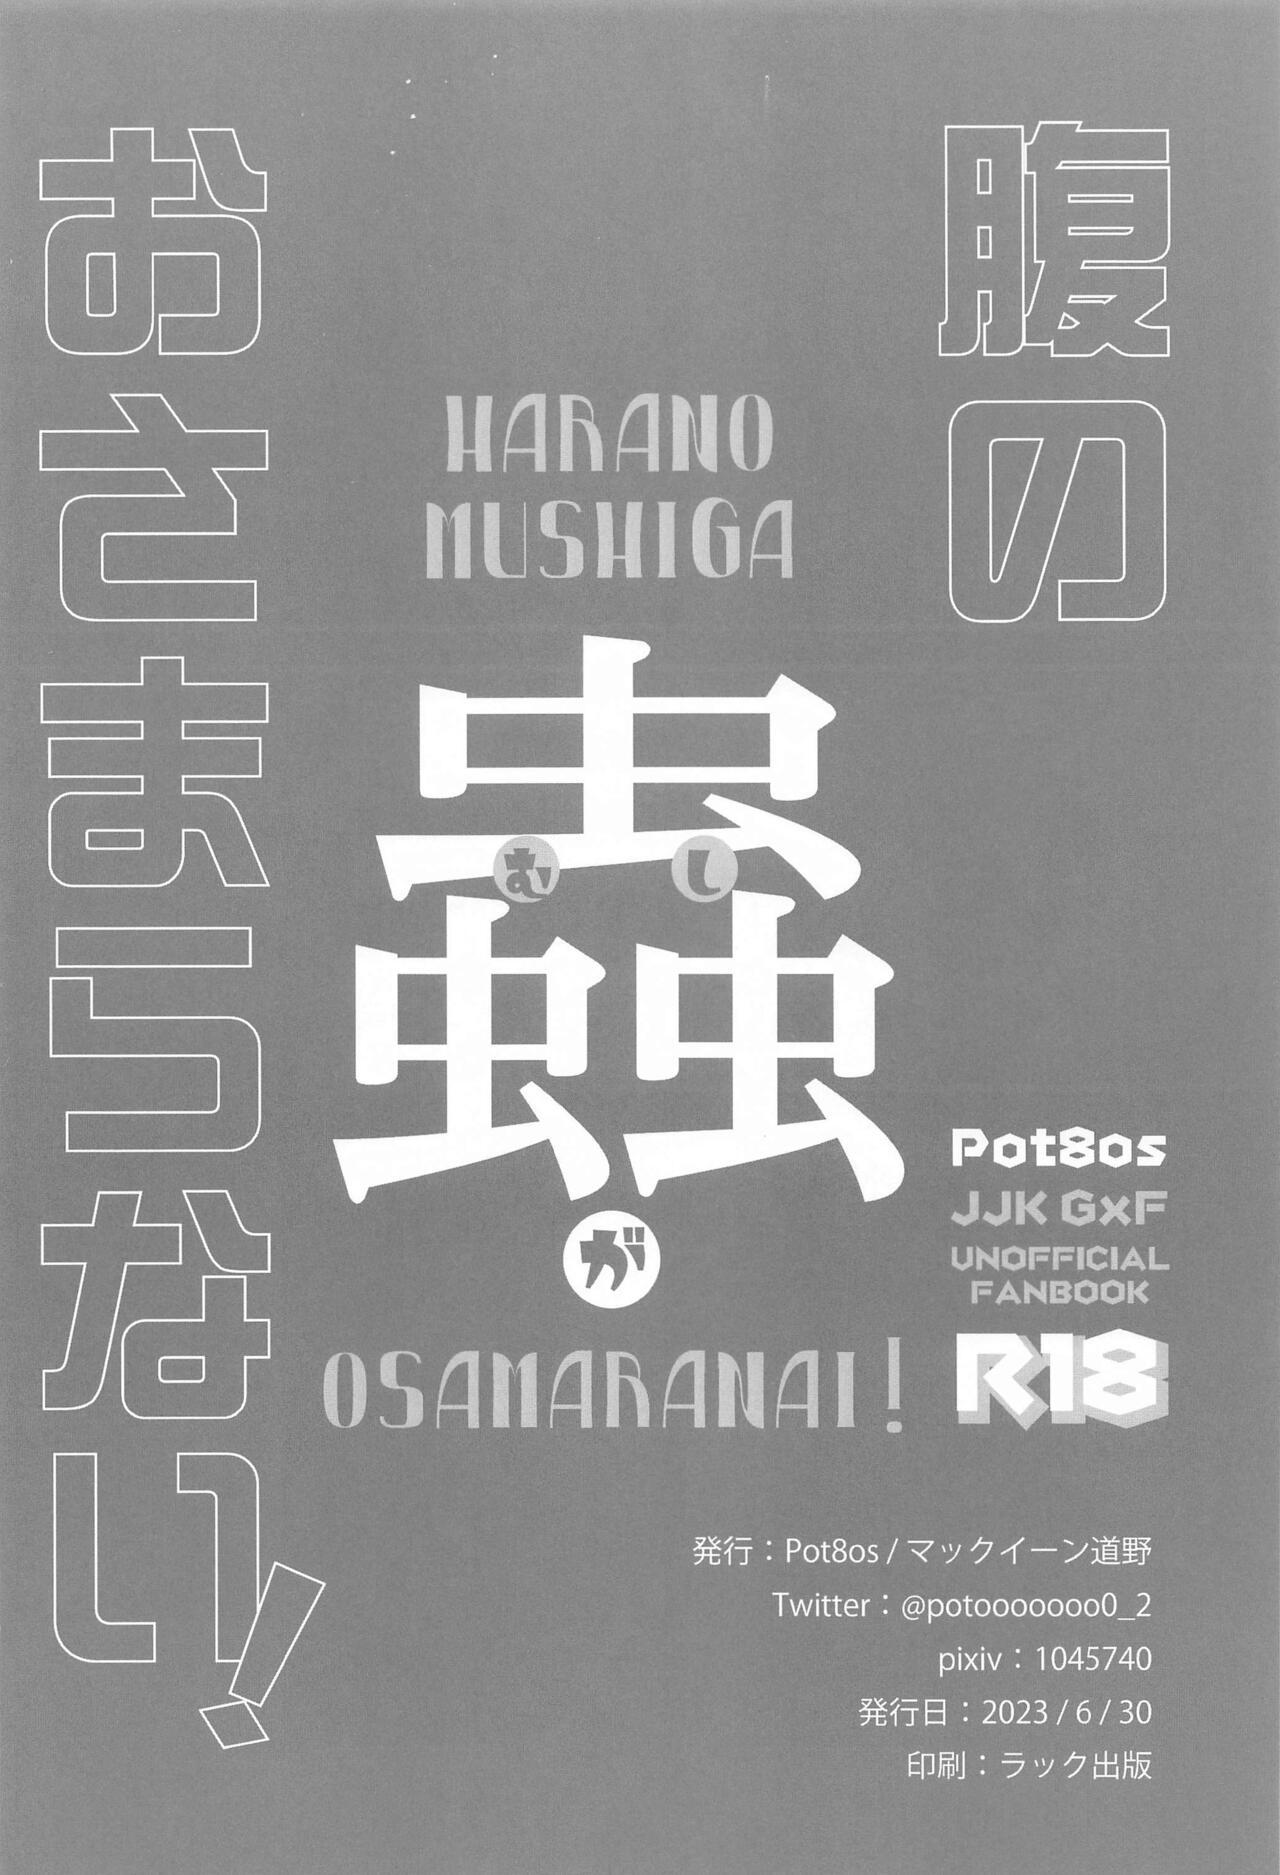 Pain Hara no Mushi ga Osamaranai! - Jujutsu kaisen Toilet - Page 21